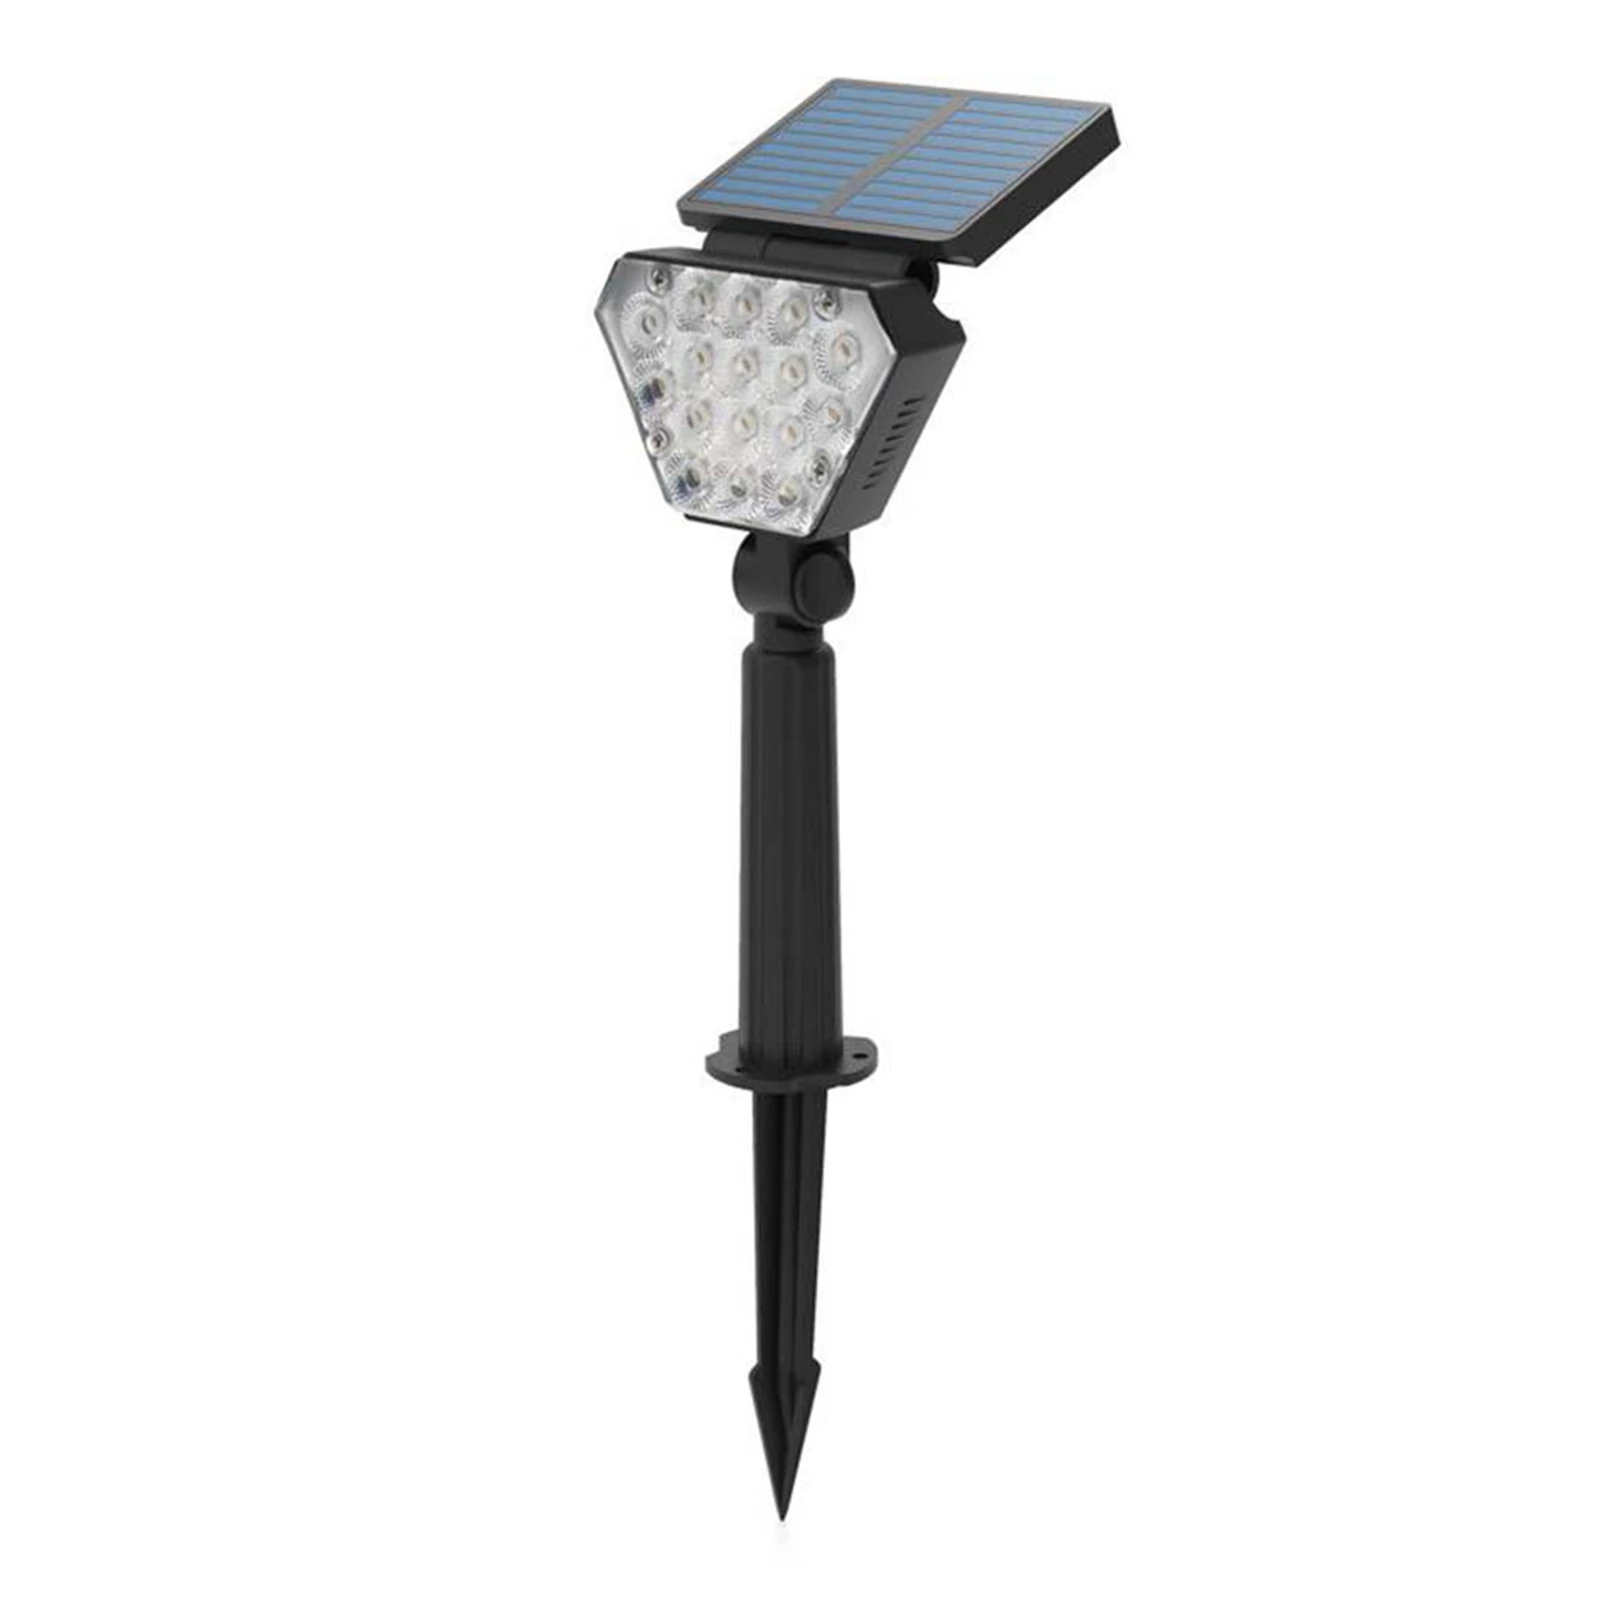 R lights outdoor led lamp waterproof wireless solar flood light for driveway patio yard thumb200